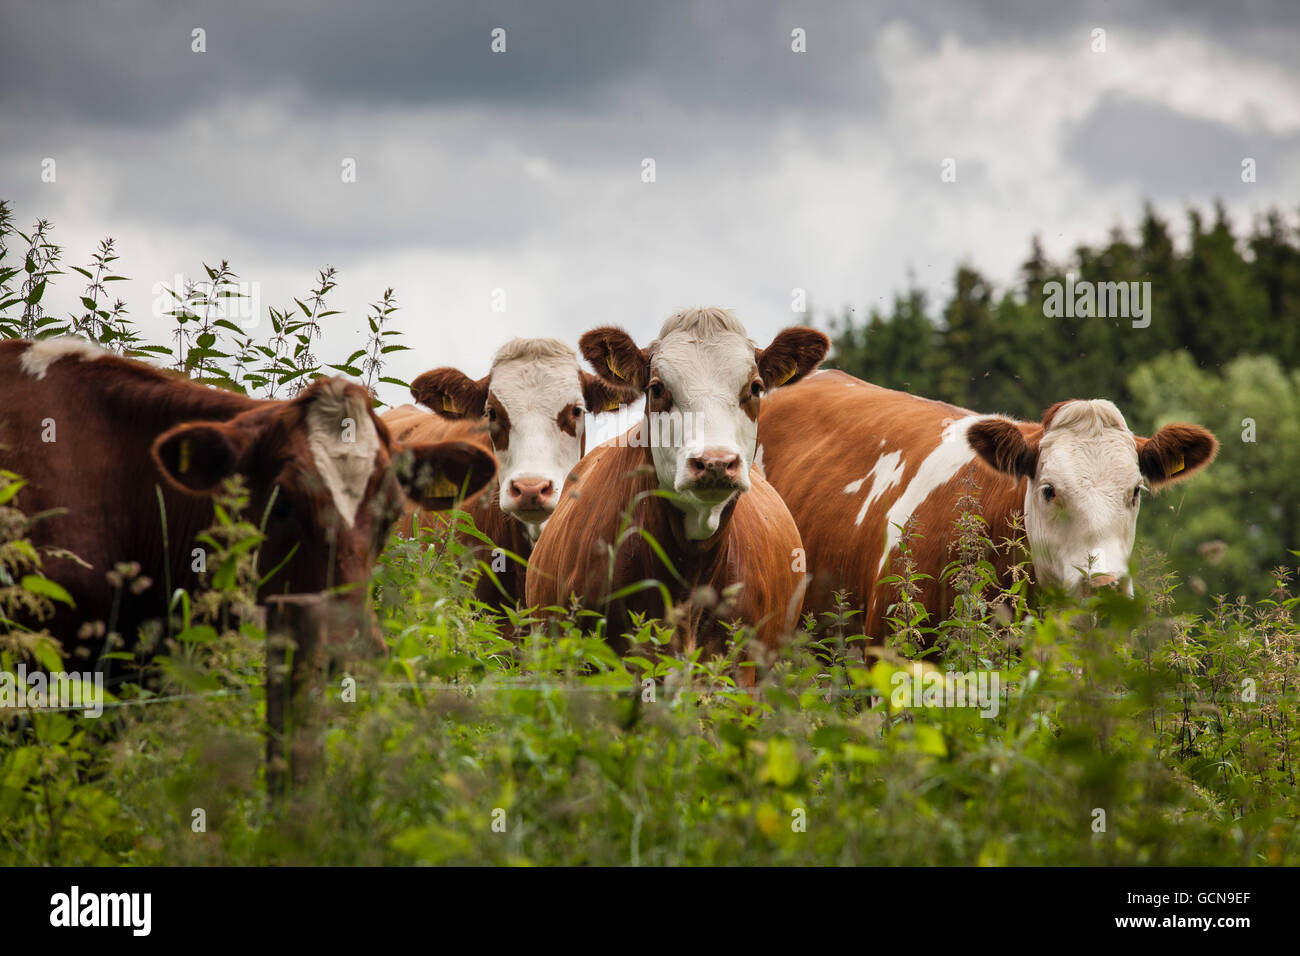 Europe, Germany, North Rhine-Westphalia, Lower Rhine Region, cattle on a pasture near Hellenthal, Eifel region. Stock Photo